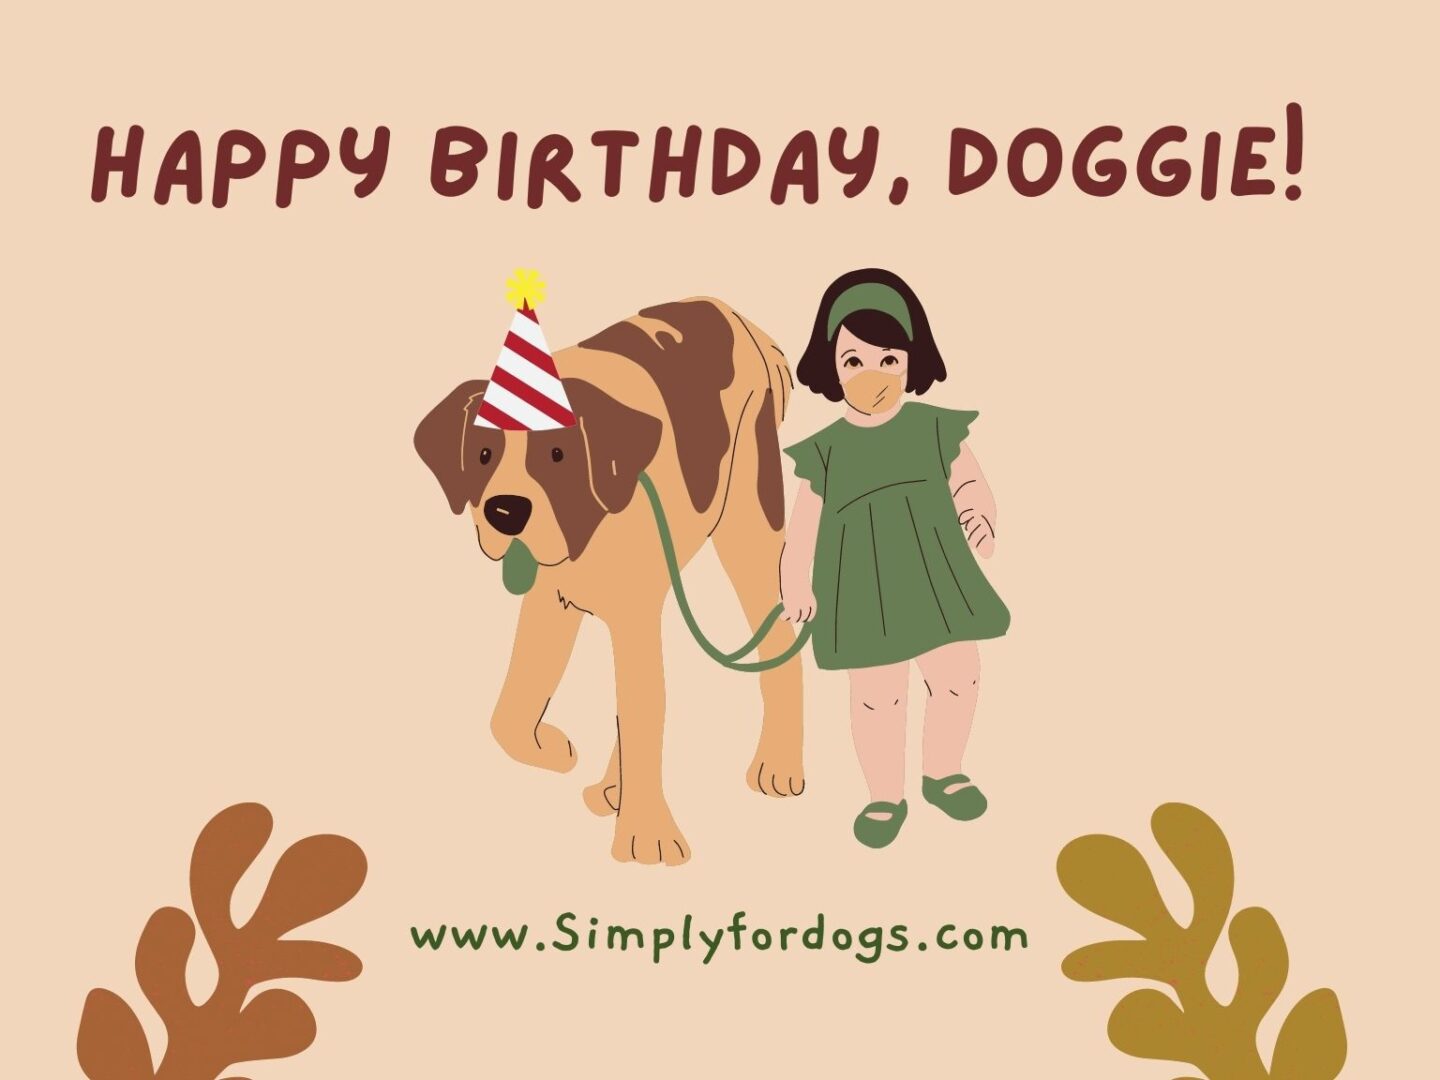 Happy Birthday, Doggie!